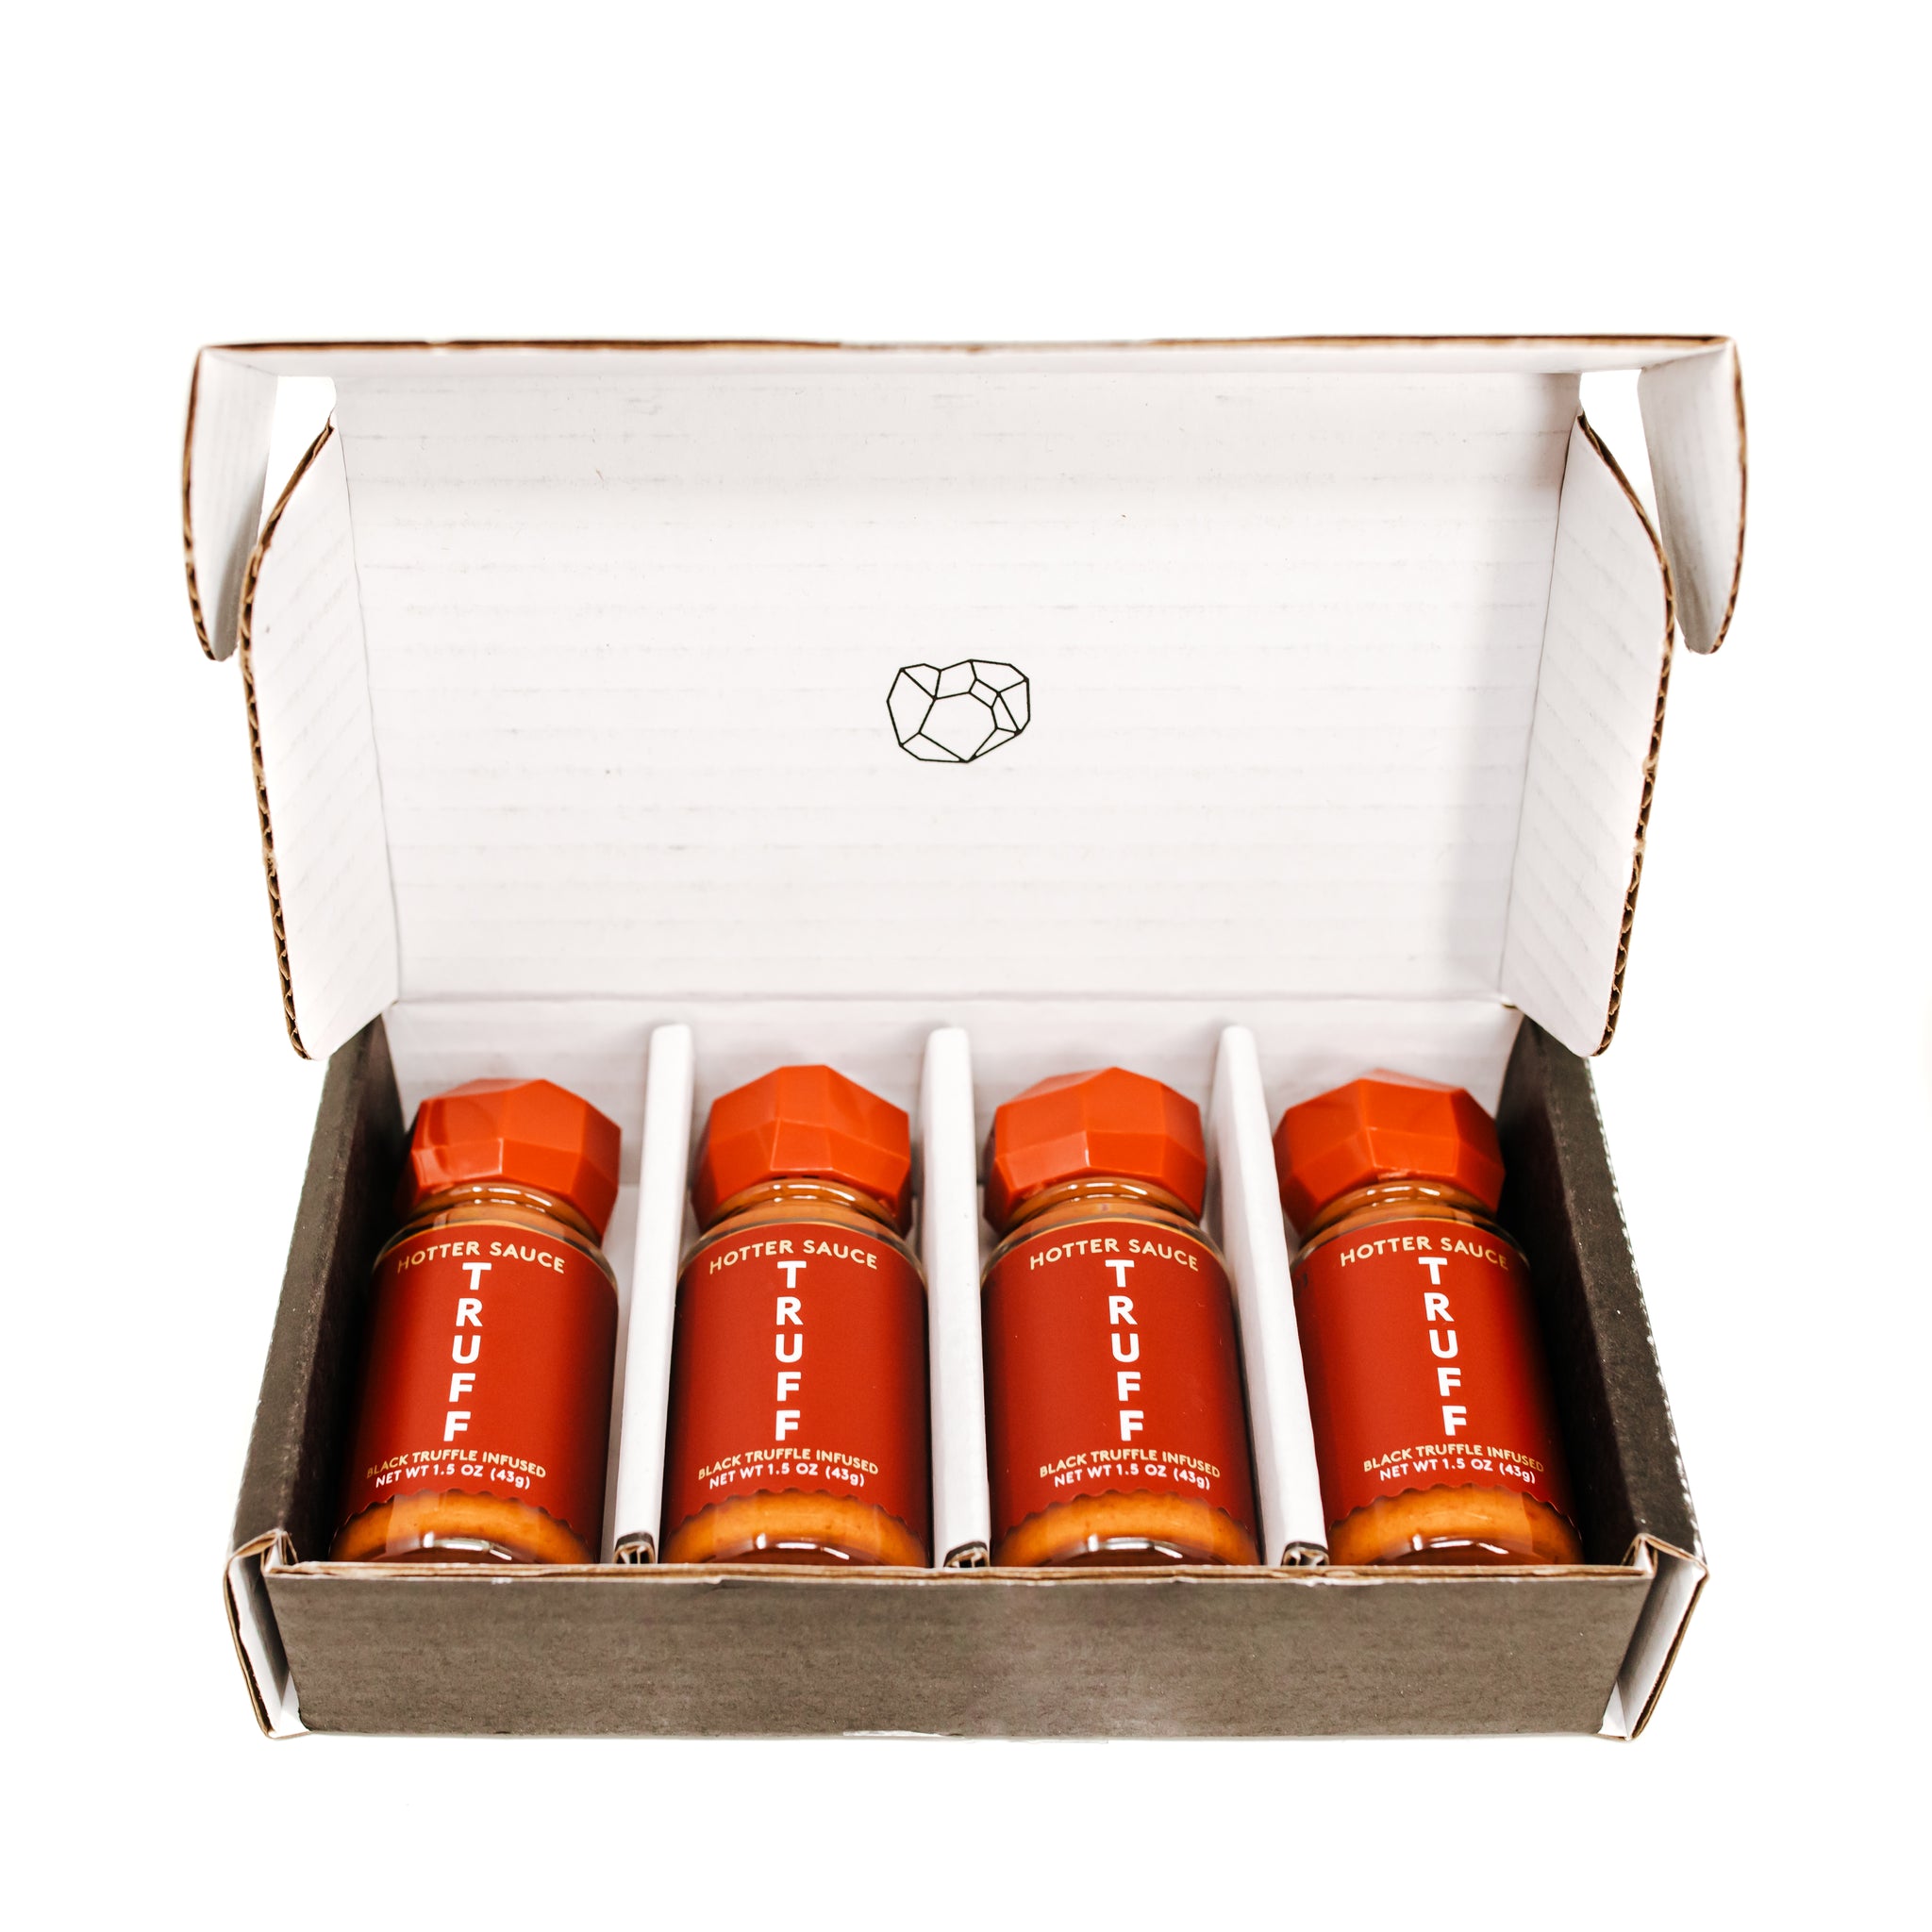 Mini TRUFF Hotter Sauce Pack